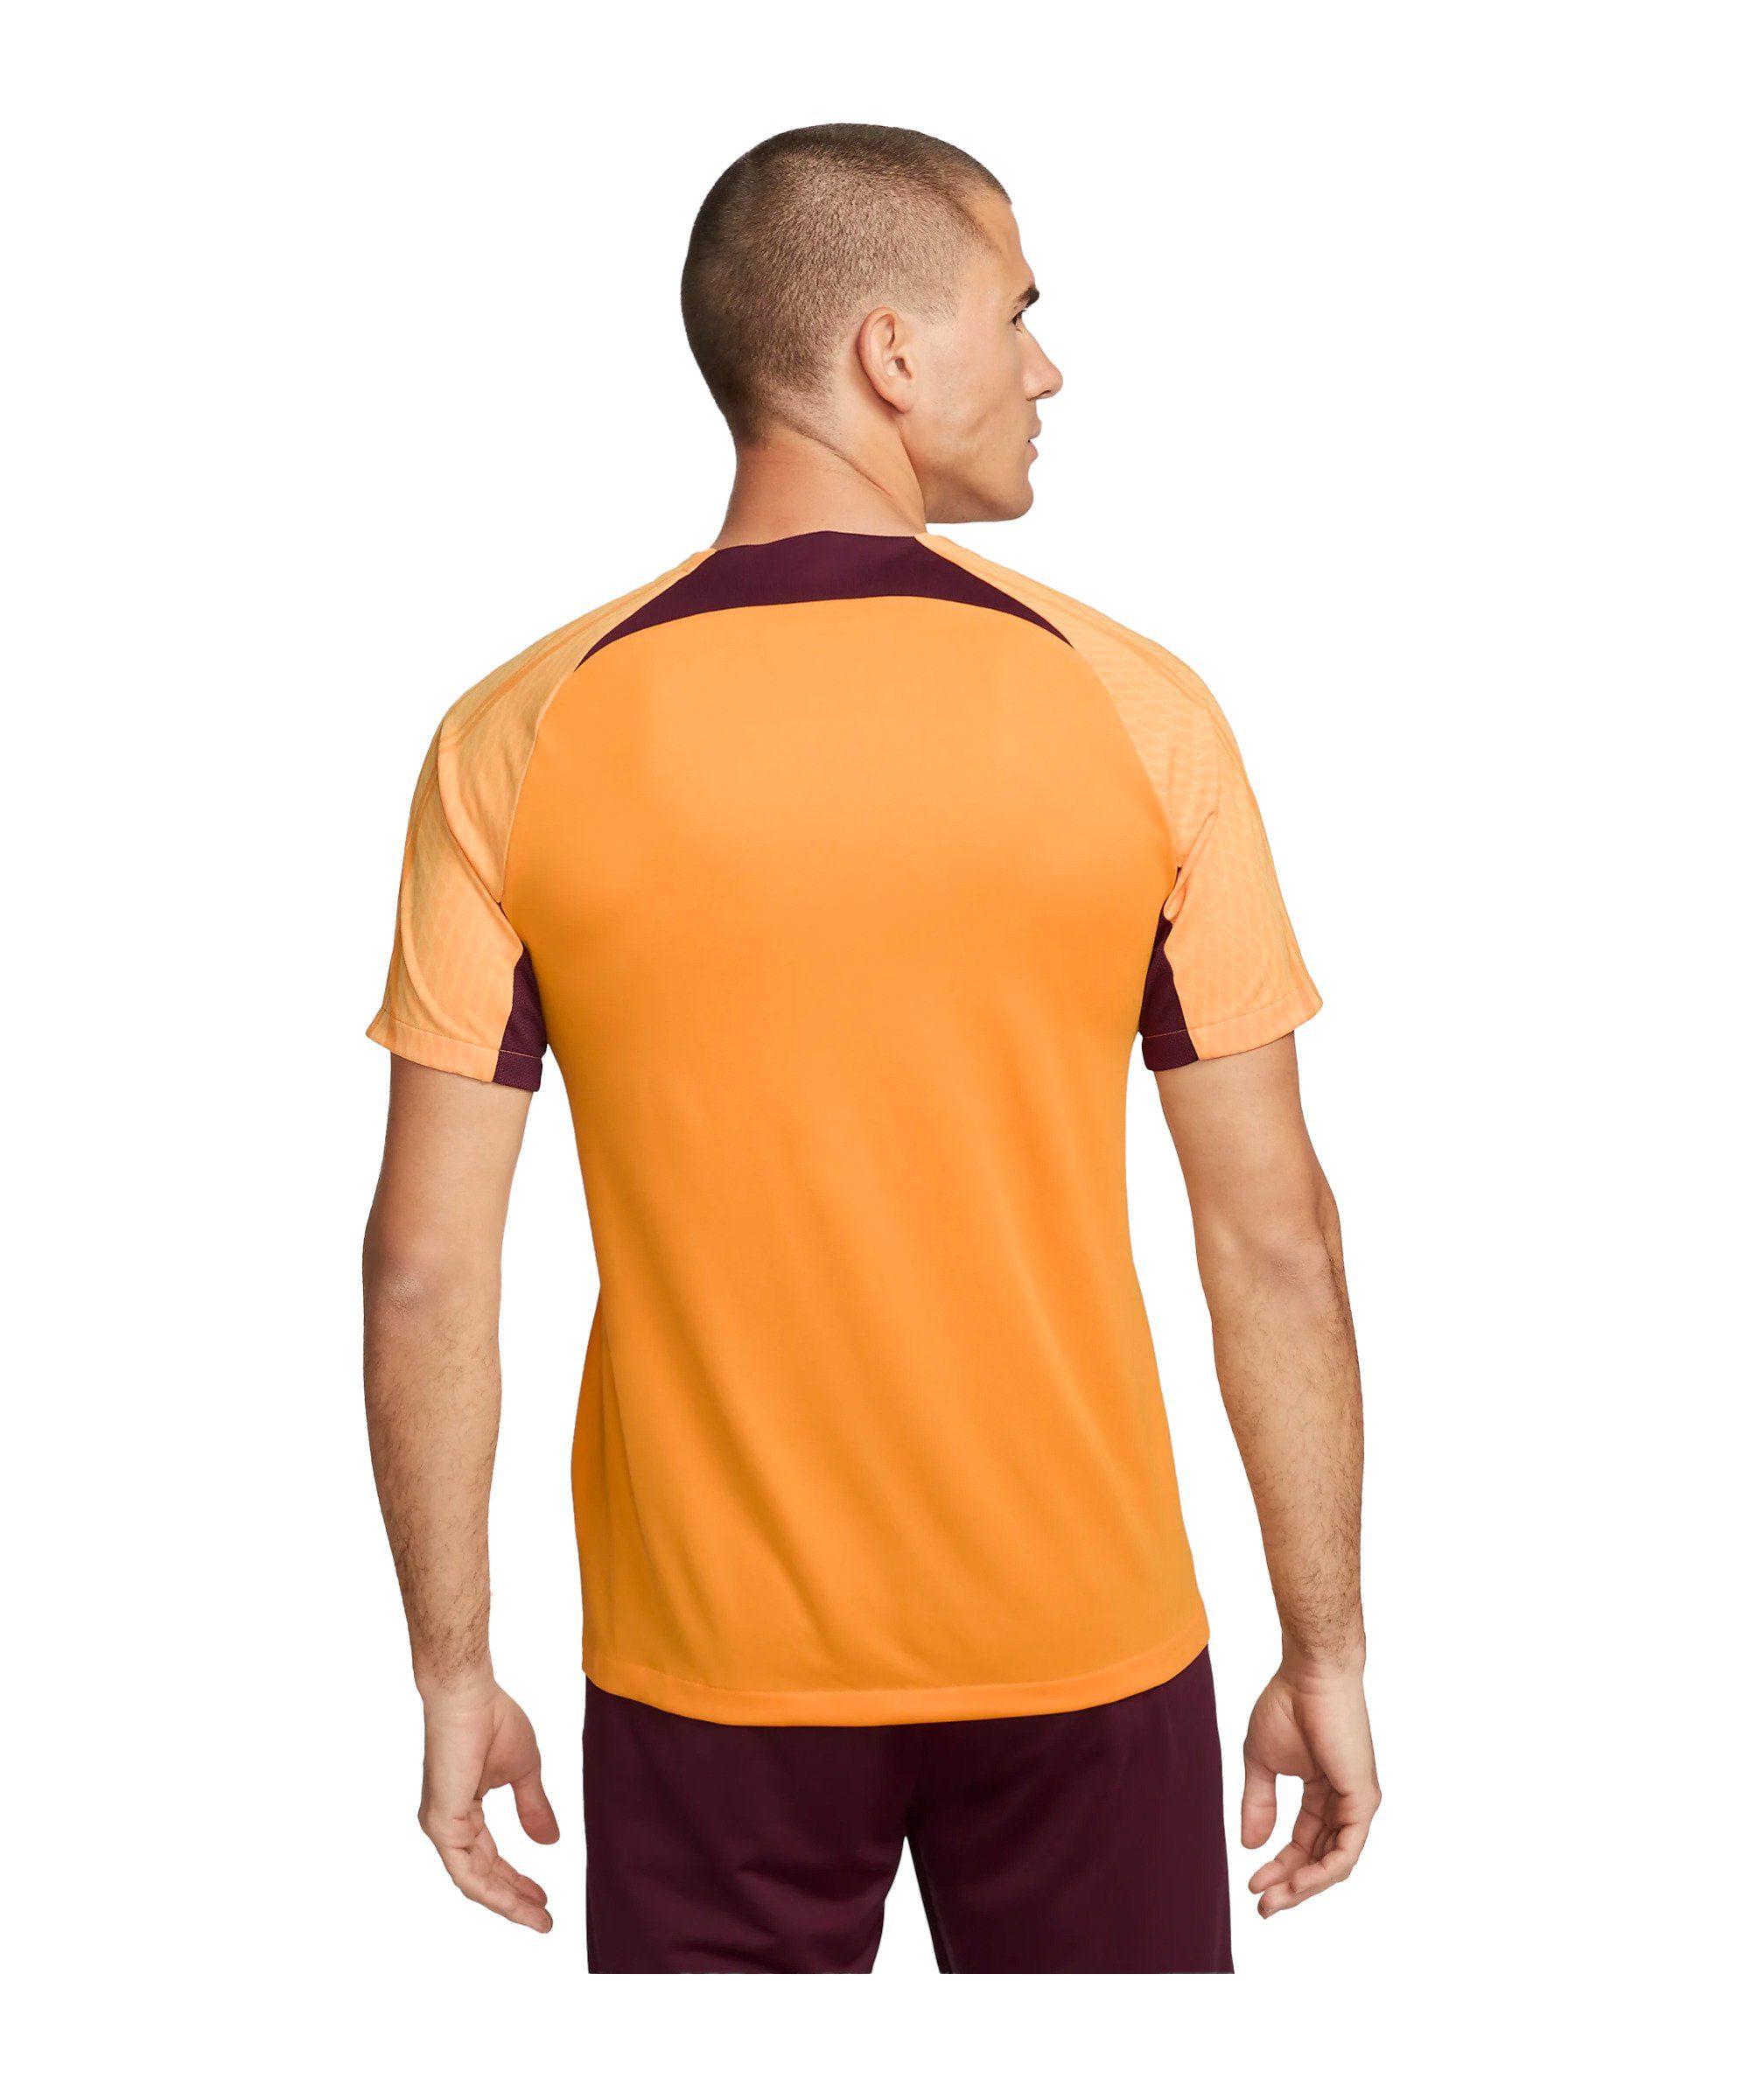 T-Shirt Galatasaray Istanbul default Nike Trainingsshirt